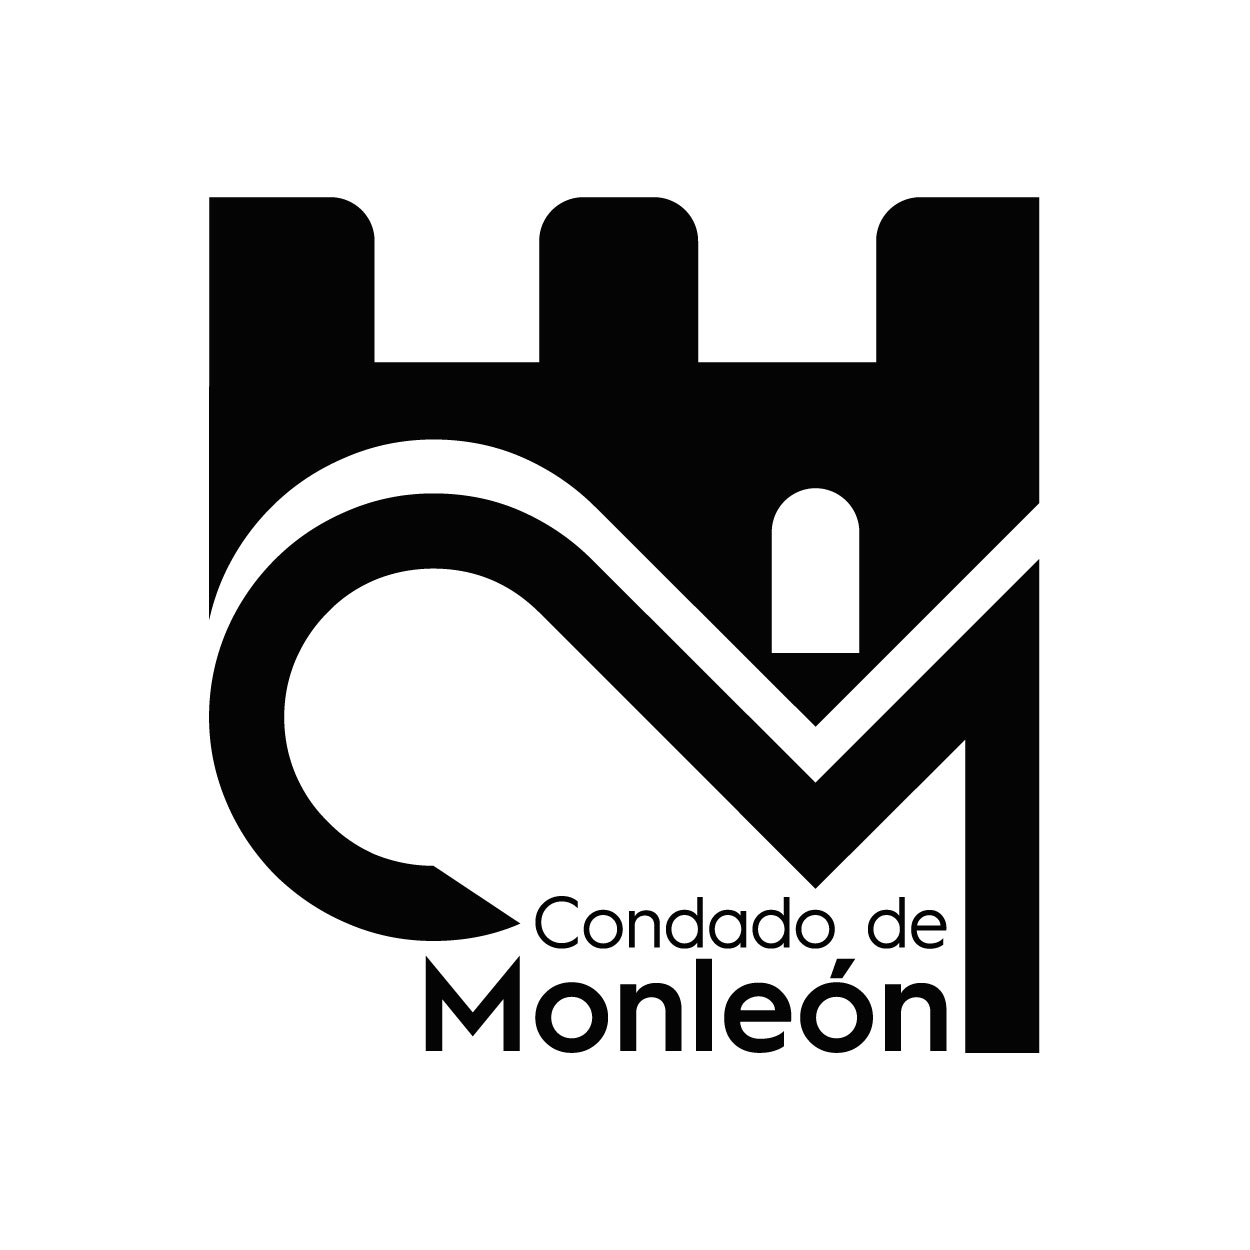 Condado de Monleón